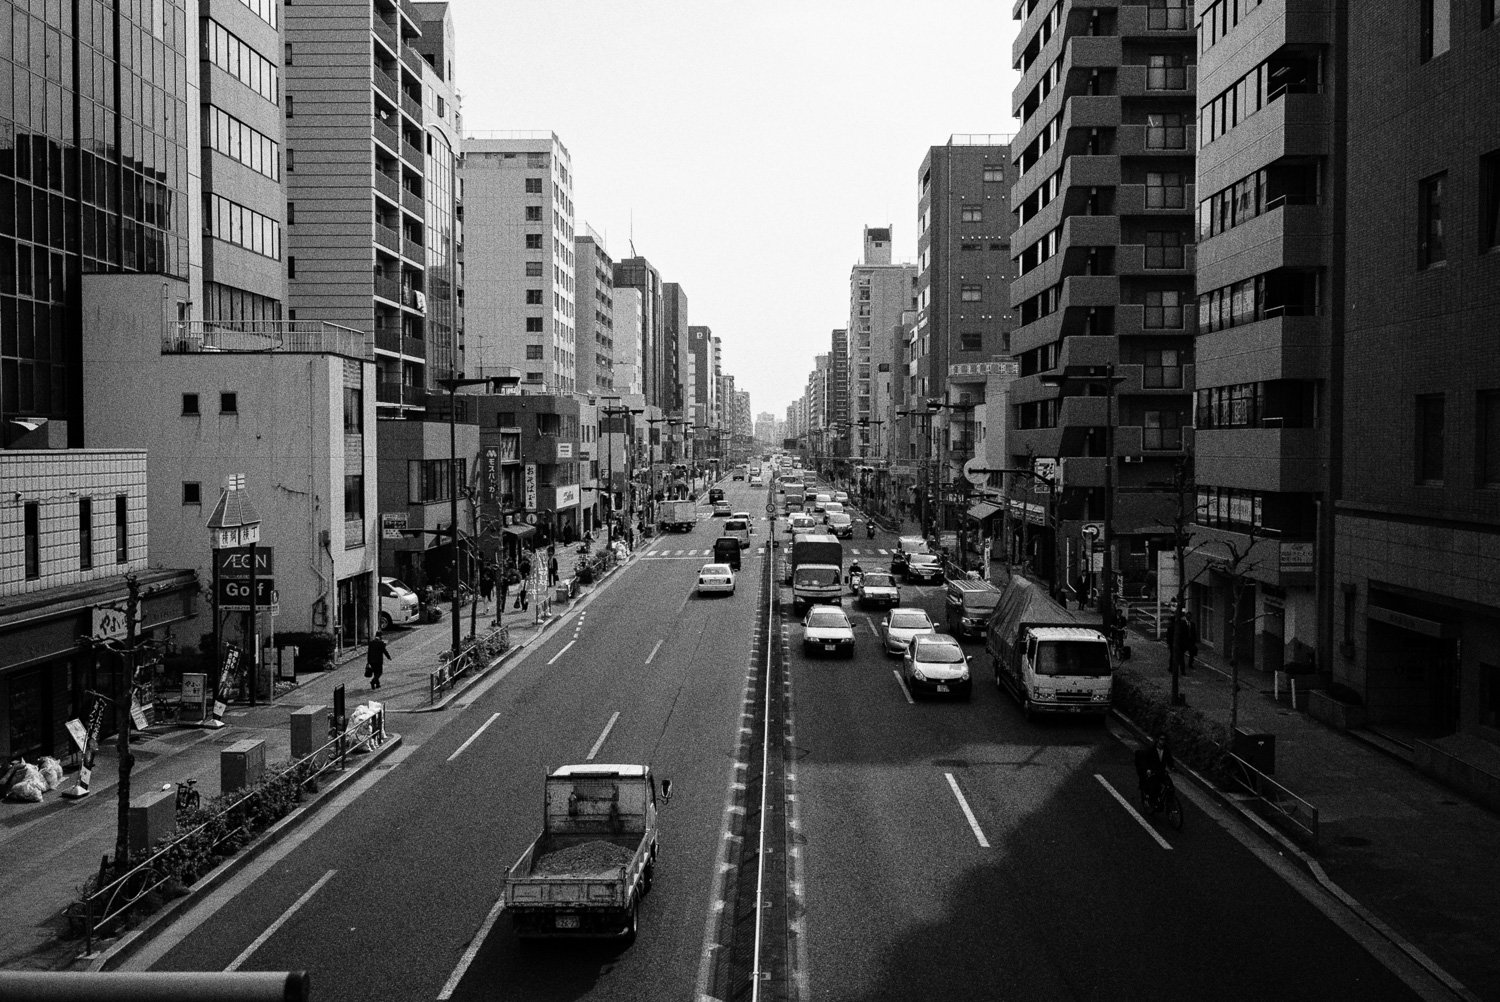 20170417_Japan_092938_Edit-Nick-Bedford,-Photographer-Black and White, Japan, Leica M Typ 240, Ryogoku, Tokyo, Voigtlander 35mm F1.7 Ultron Asph, VSCO Film, West End Camera Club.jpg